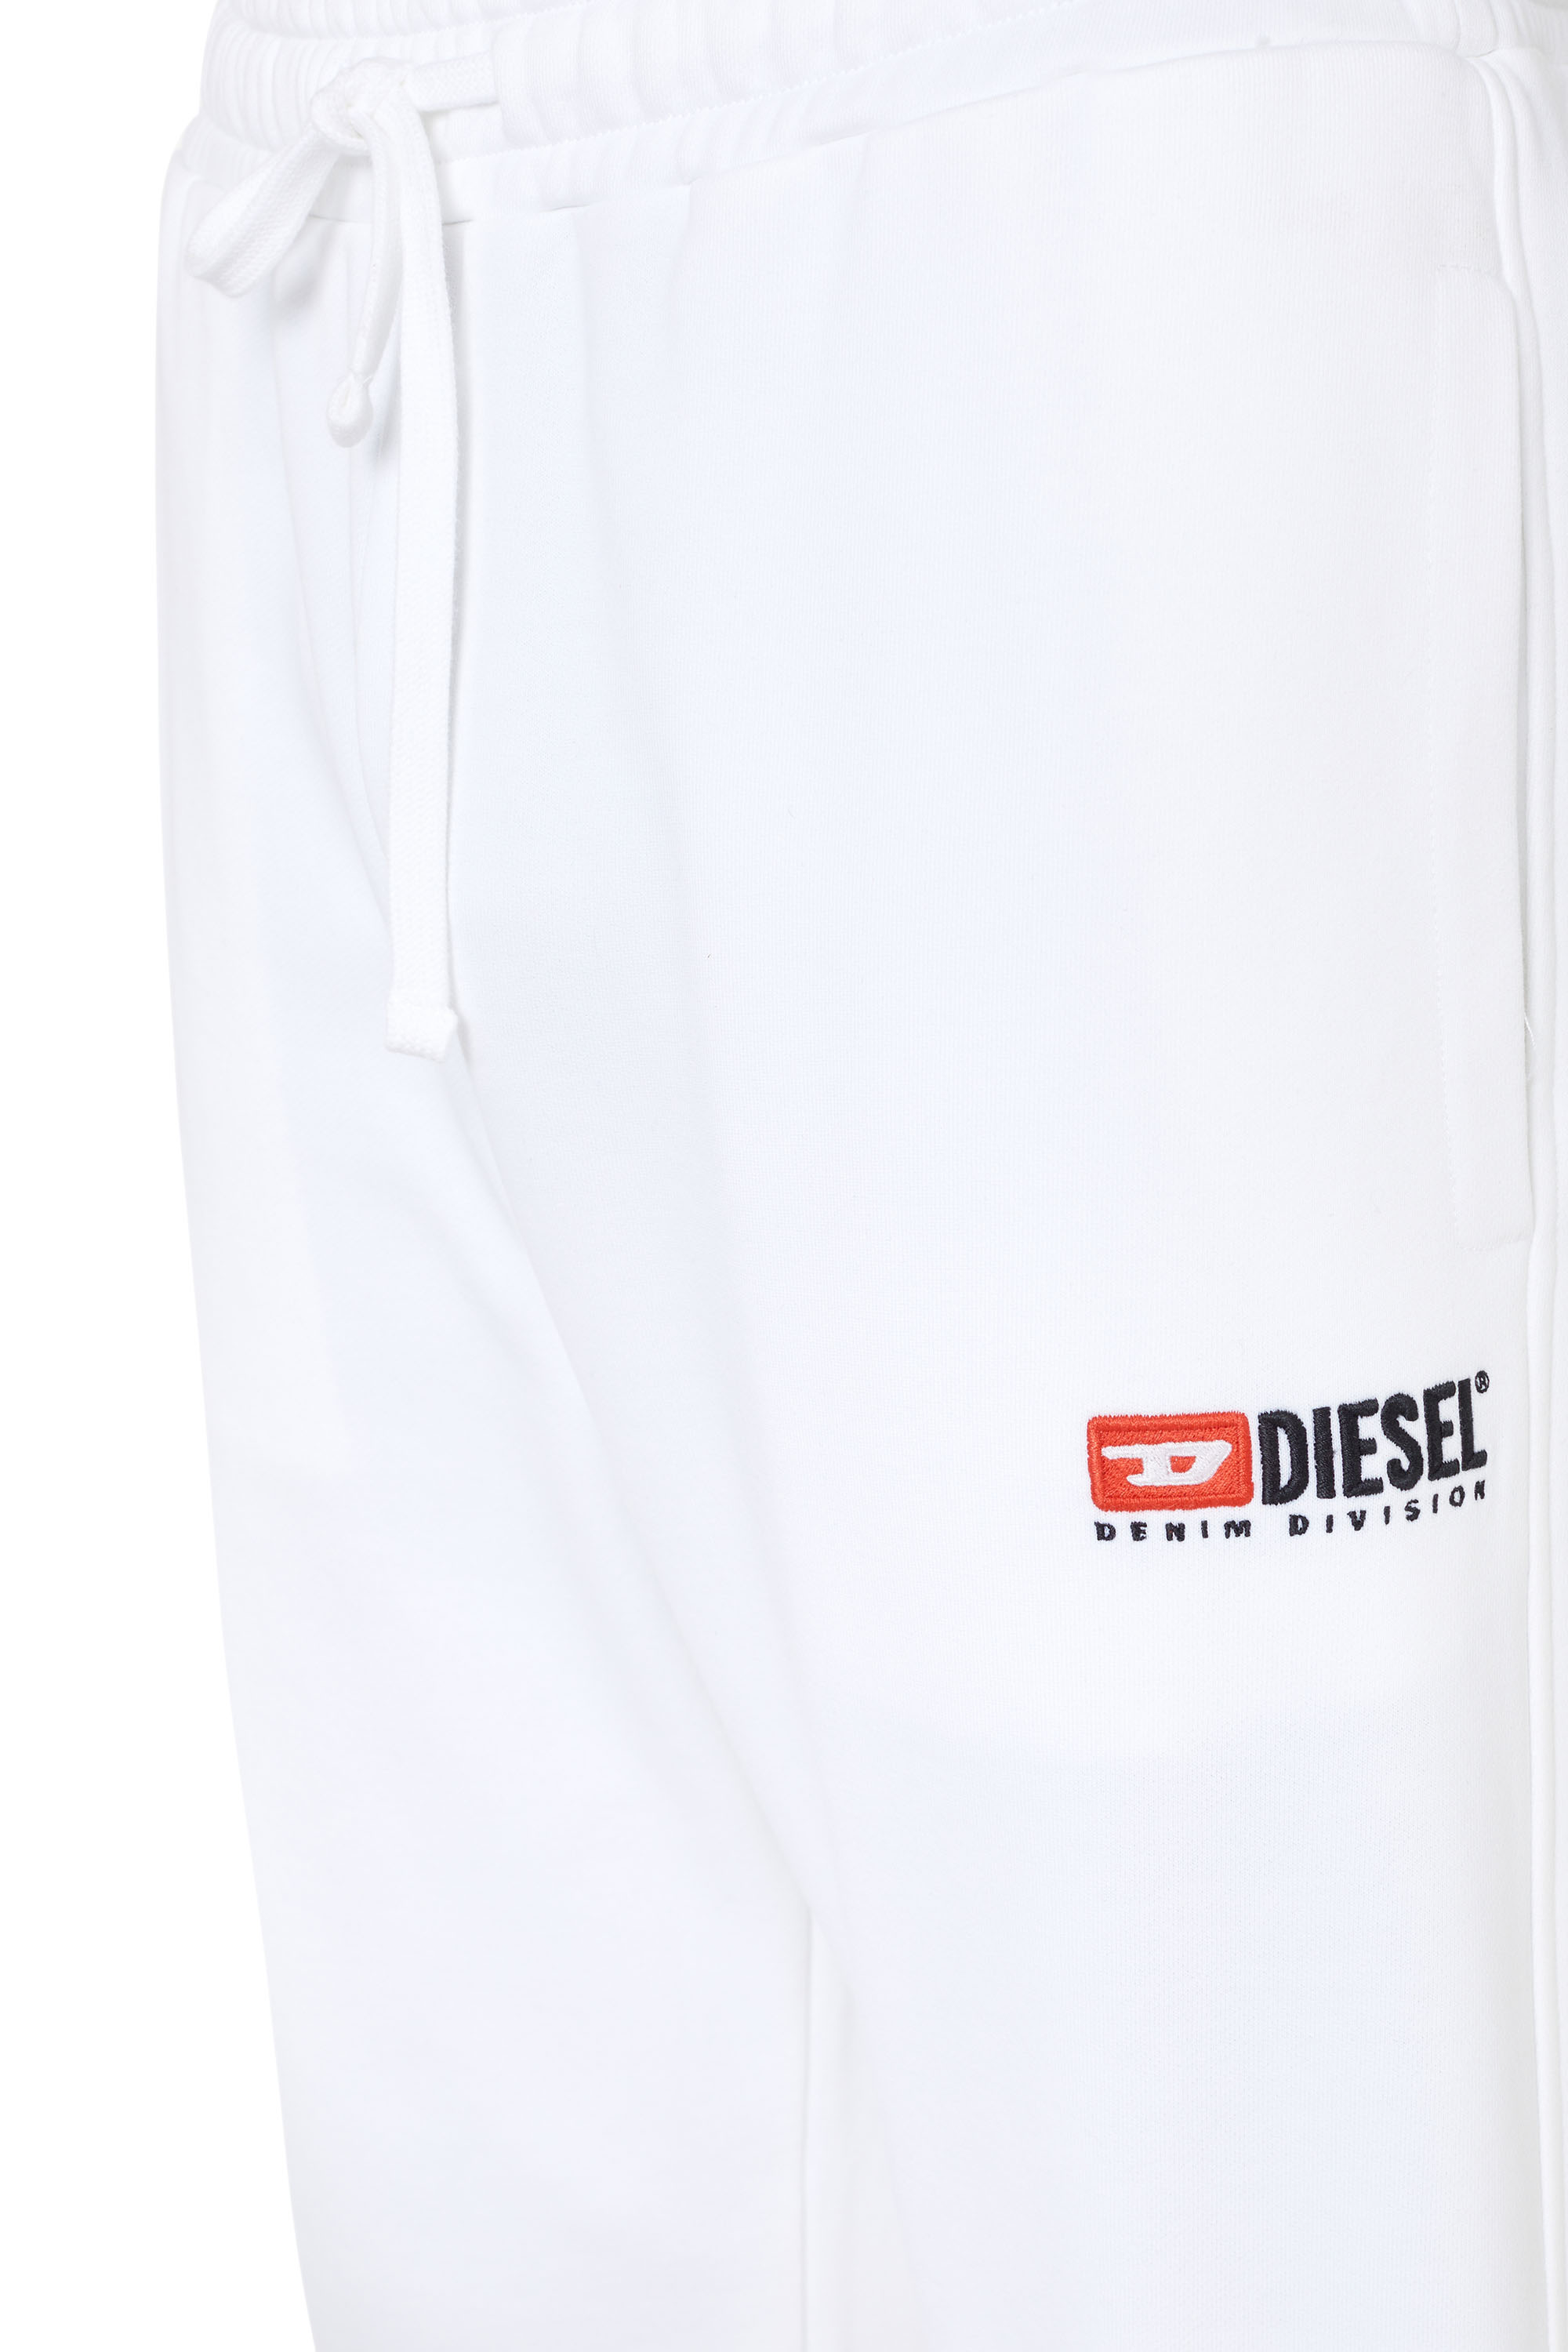 Diesel - P-TARY-DIV, Blanc - Image 3